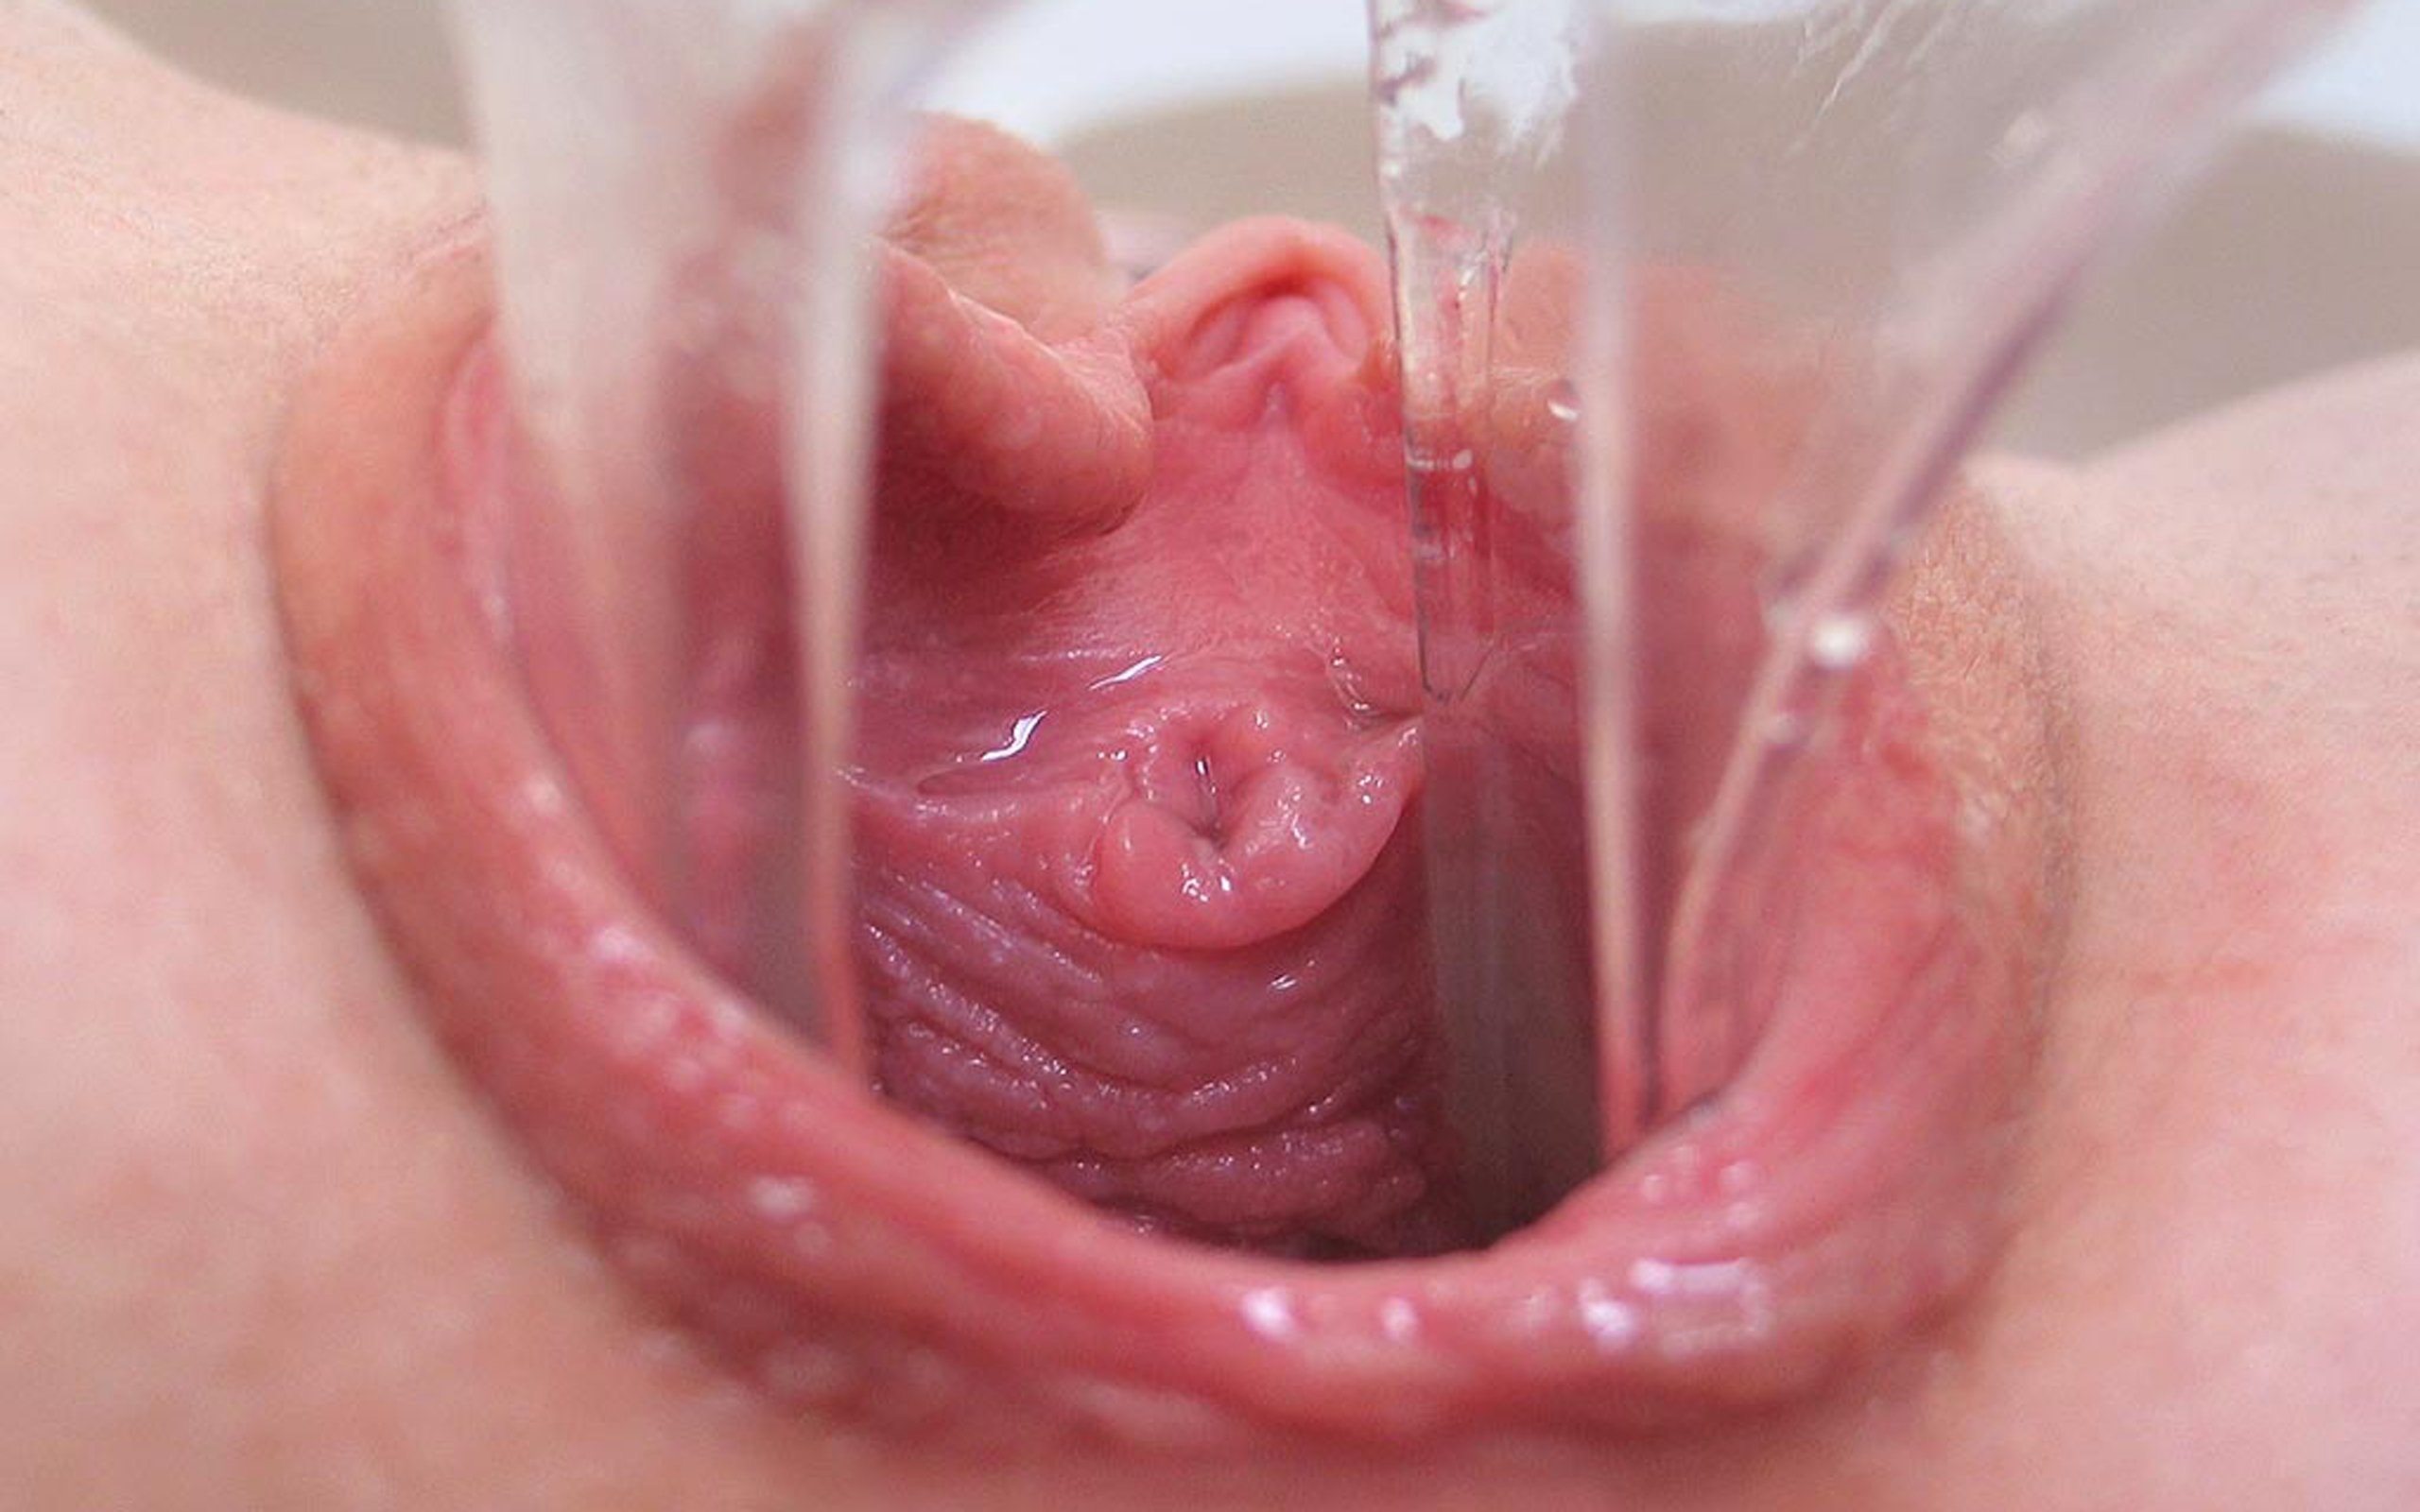 изнутри во влагалище сперма фото 21